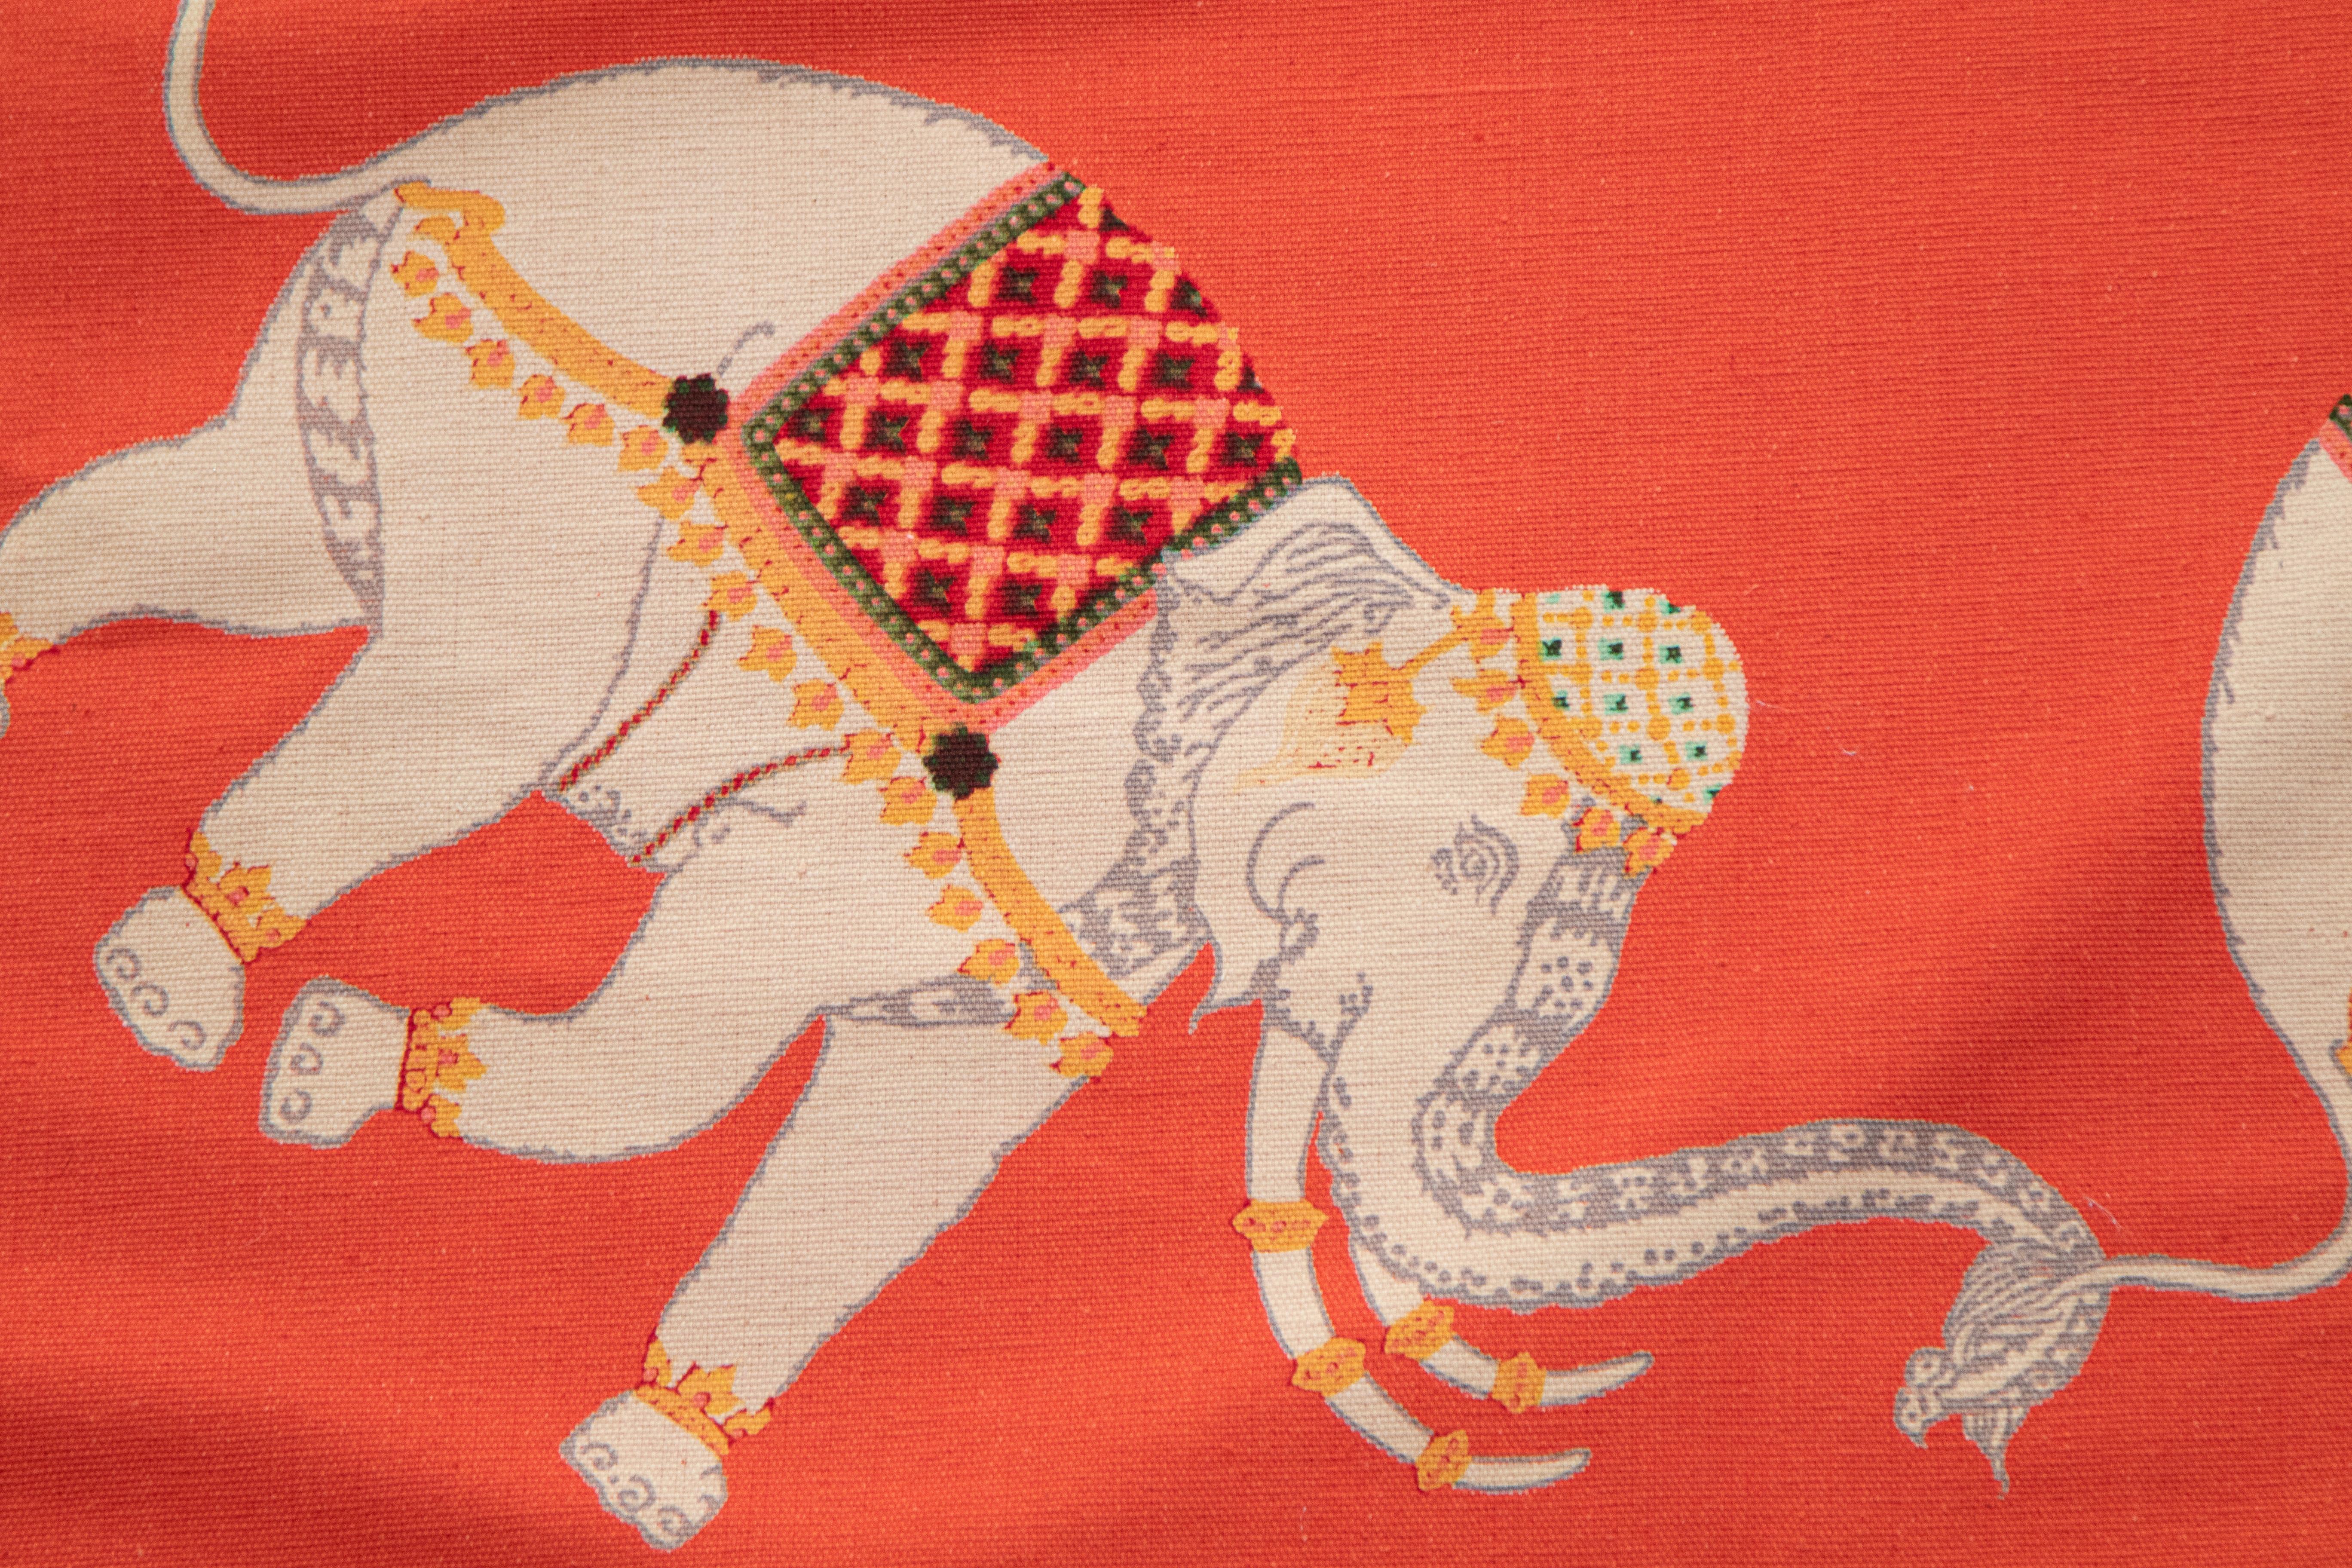 Jim Thompson Burnt Orange Large Floor Pillow Cover with Elephant Print For Sale 6